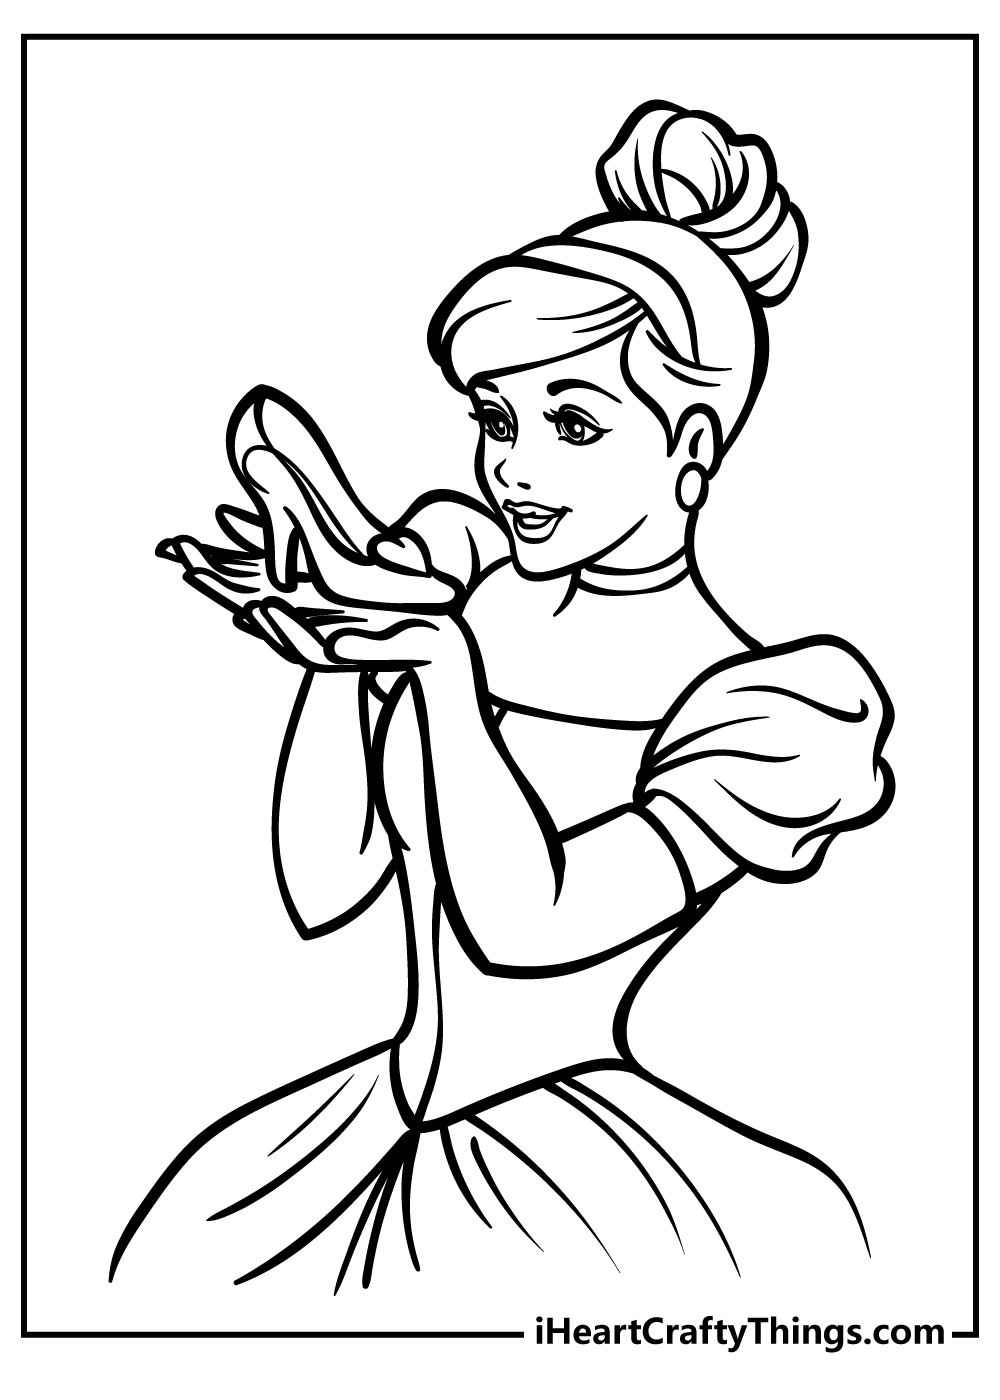 Cinderella coloring pages free printables